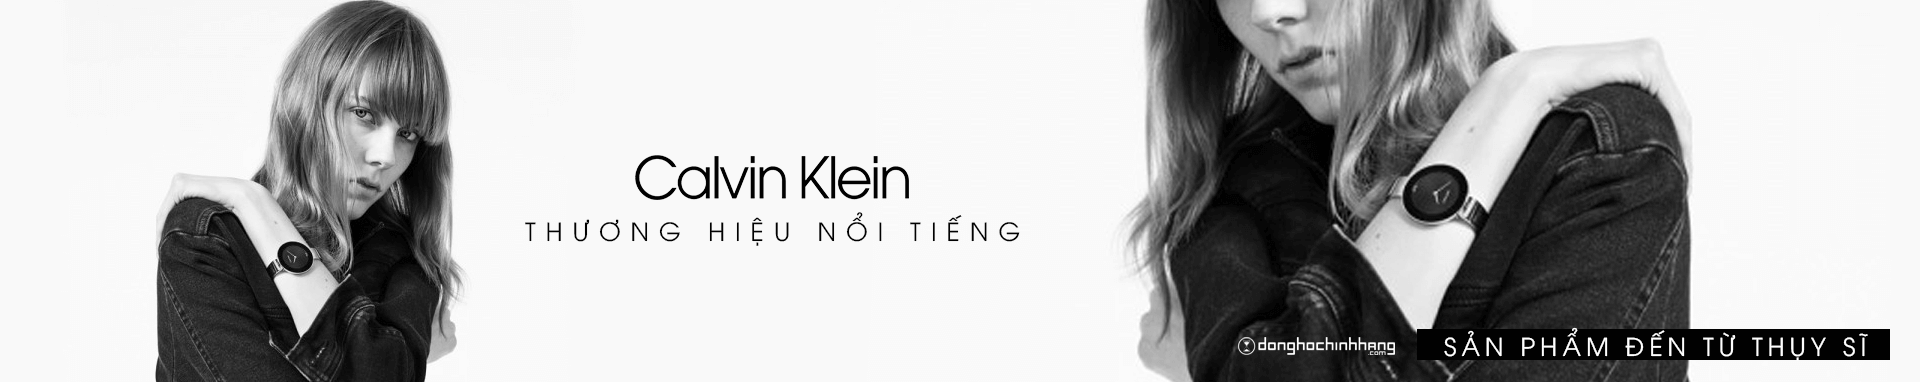 Đồng hồ nữ thời trang Calvin Klein - Đẳng cấp số 1 thế giới